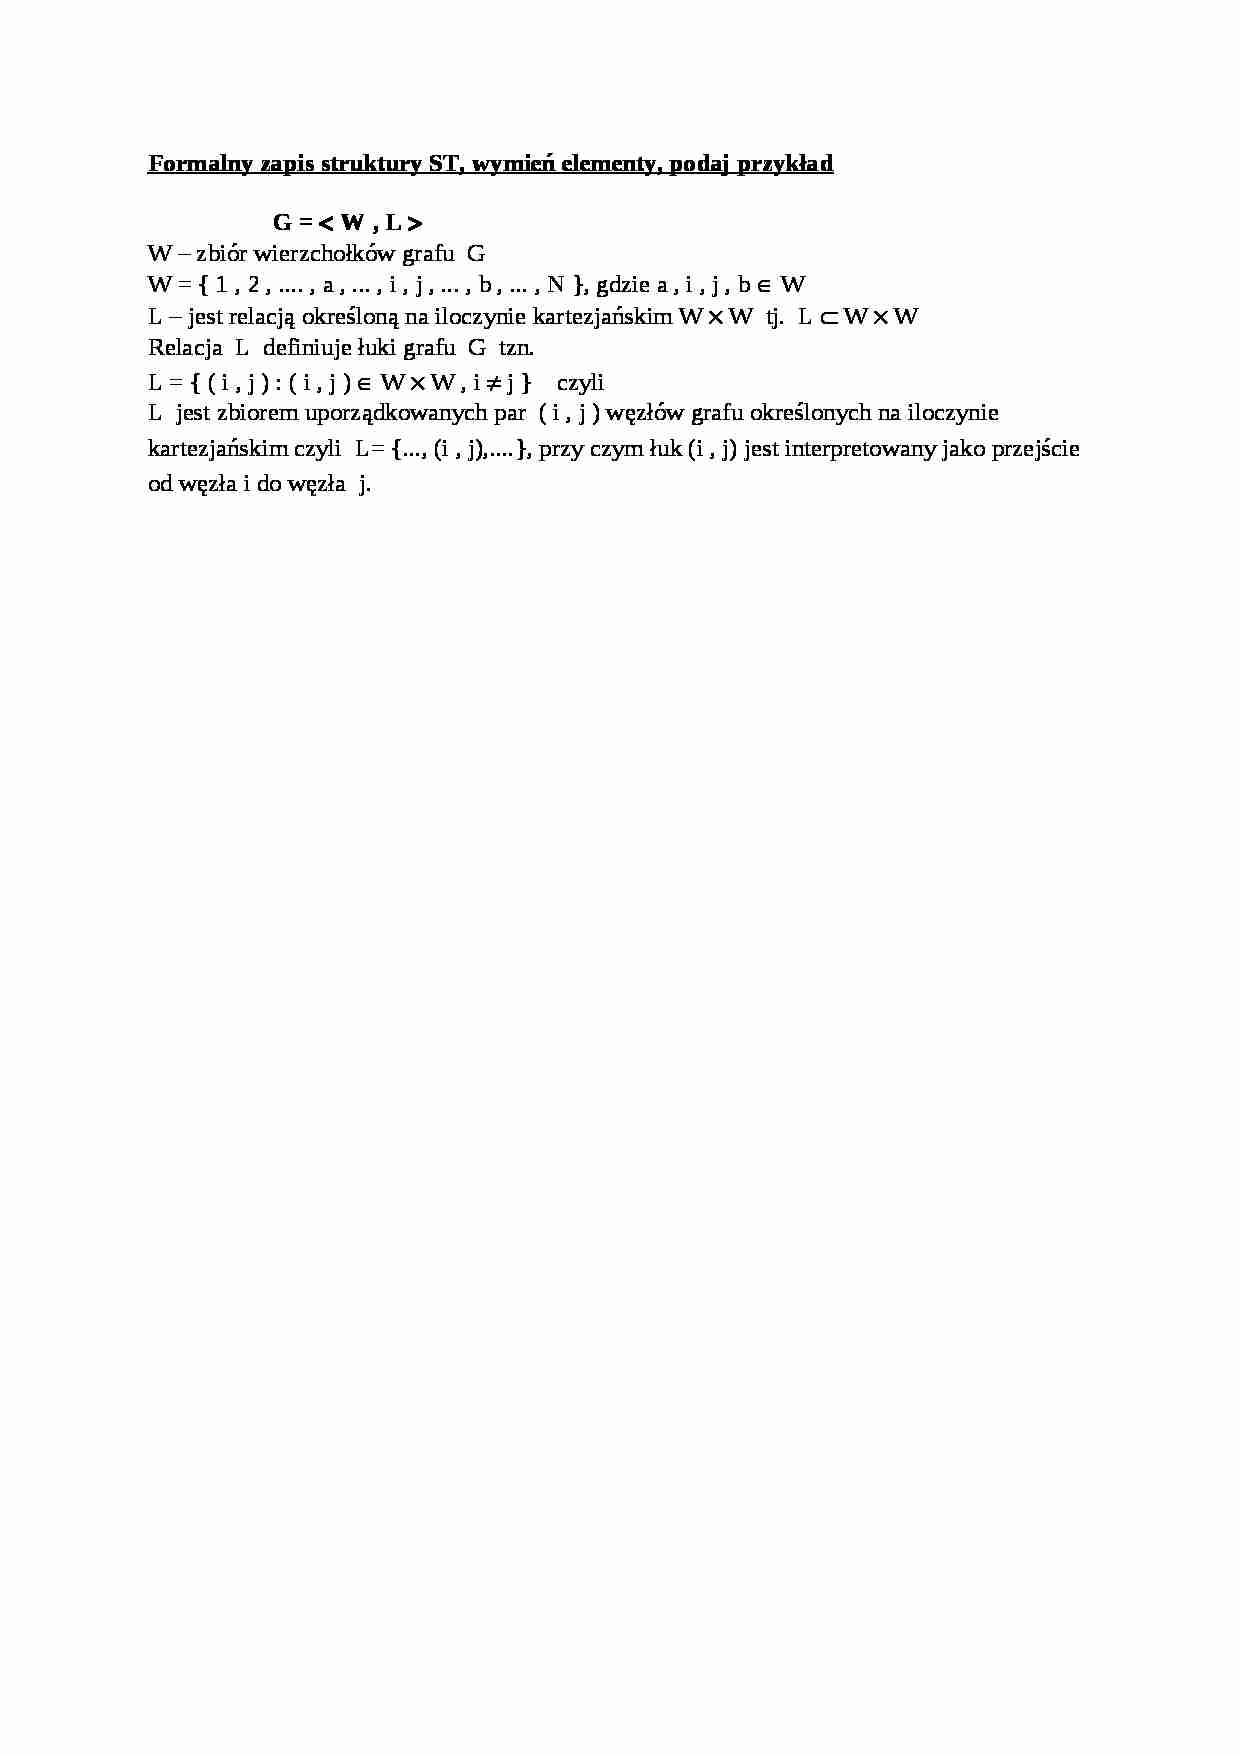 Formalny zapis struktury ST - strona 1